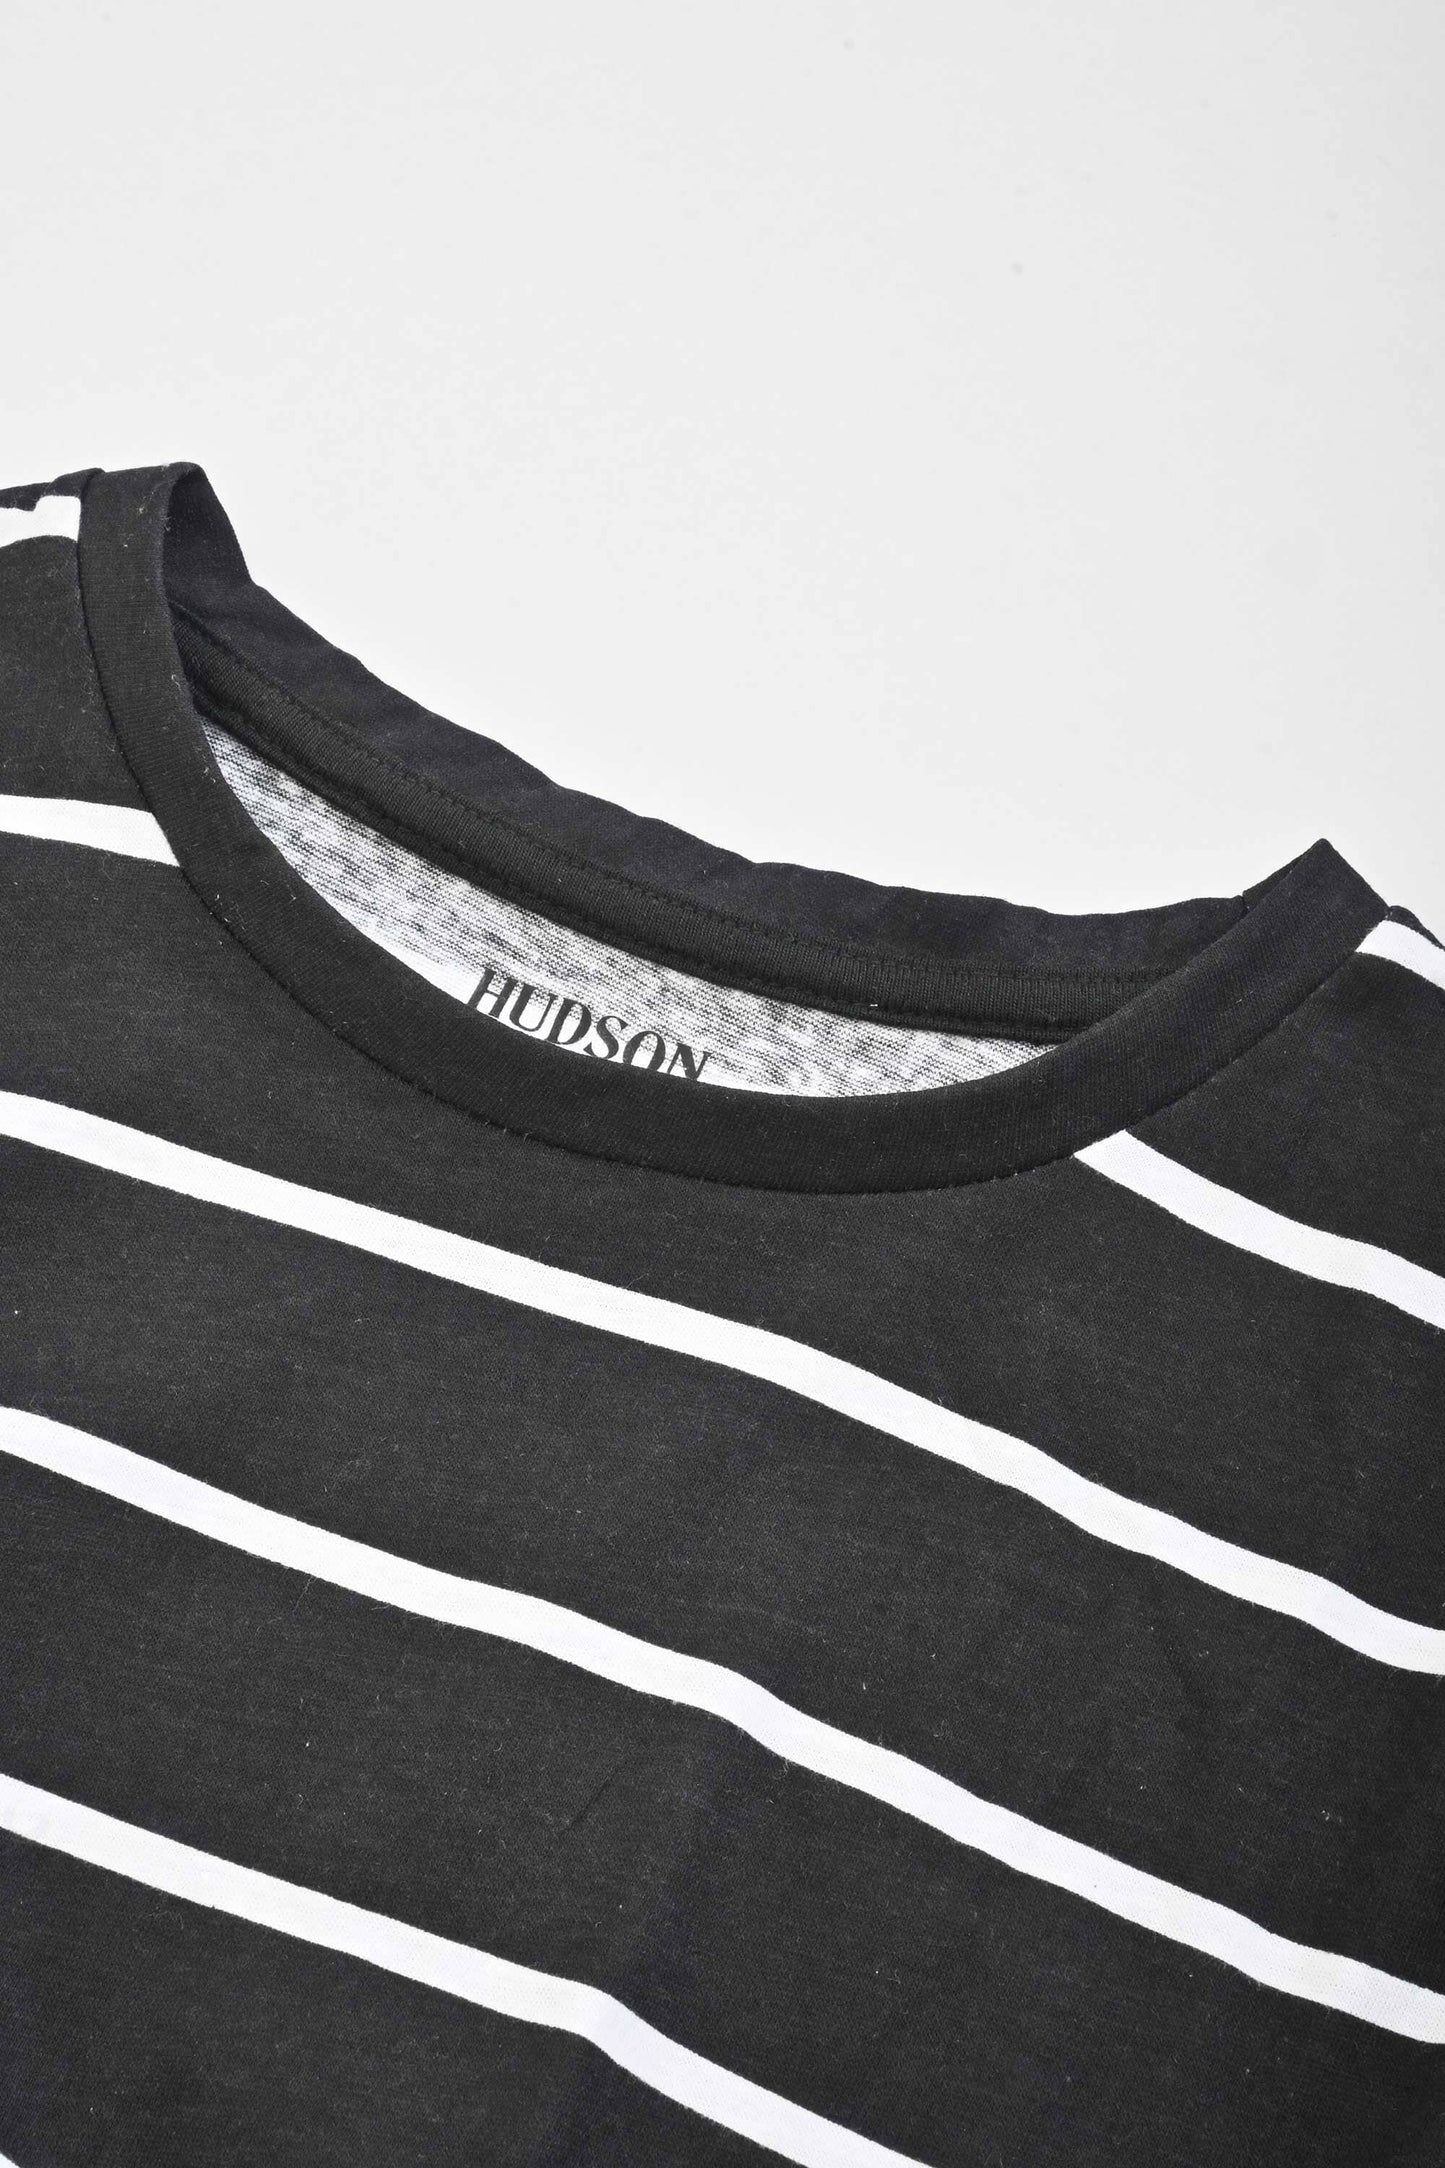 Hudson Girl's Lining Design Stylish Tee Shirt